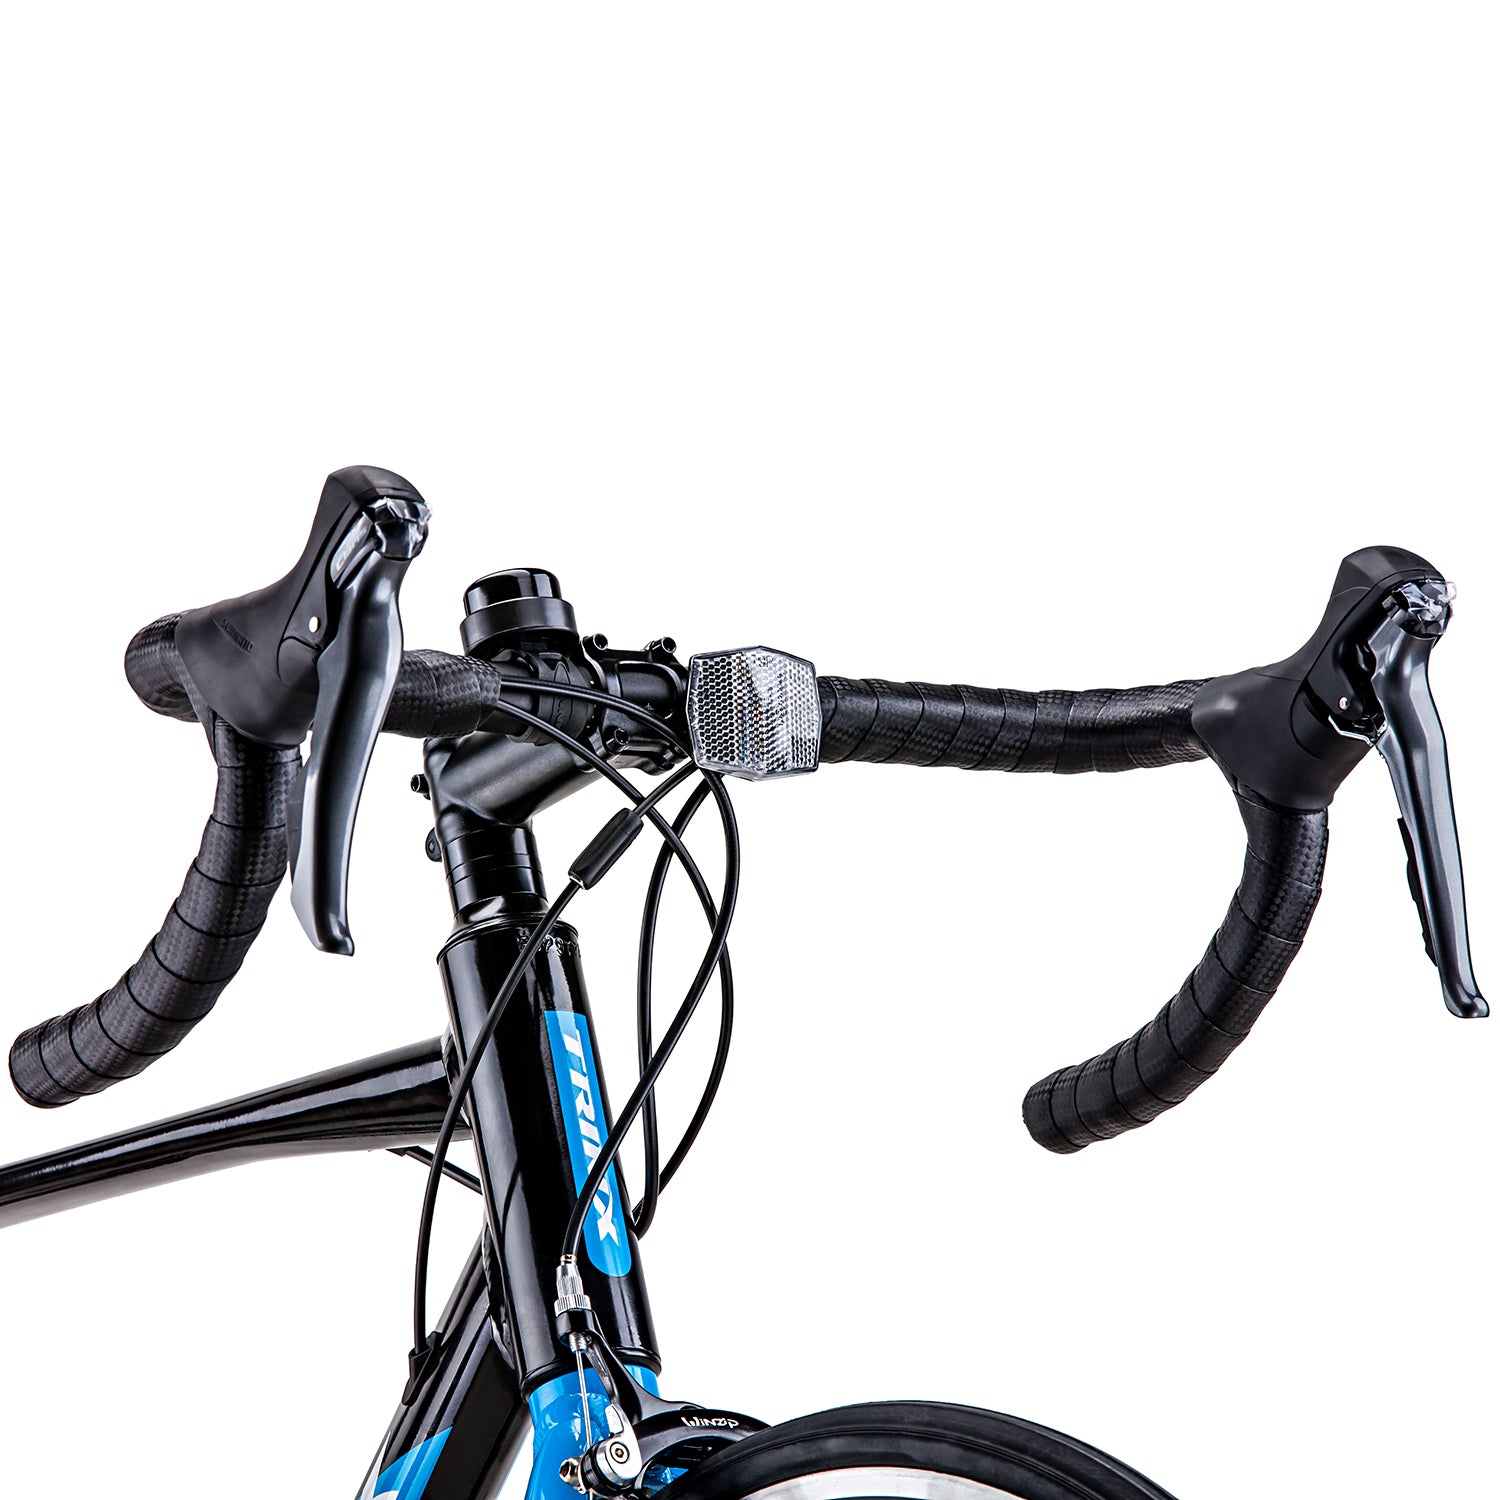 Handle of Road Bike Trinx Climber 2.0 Gravel alloy 700C